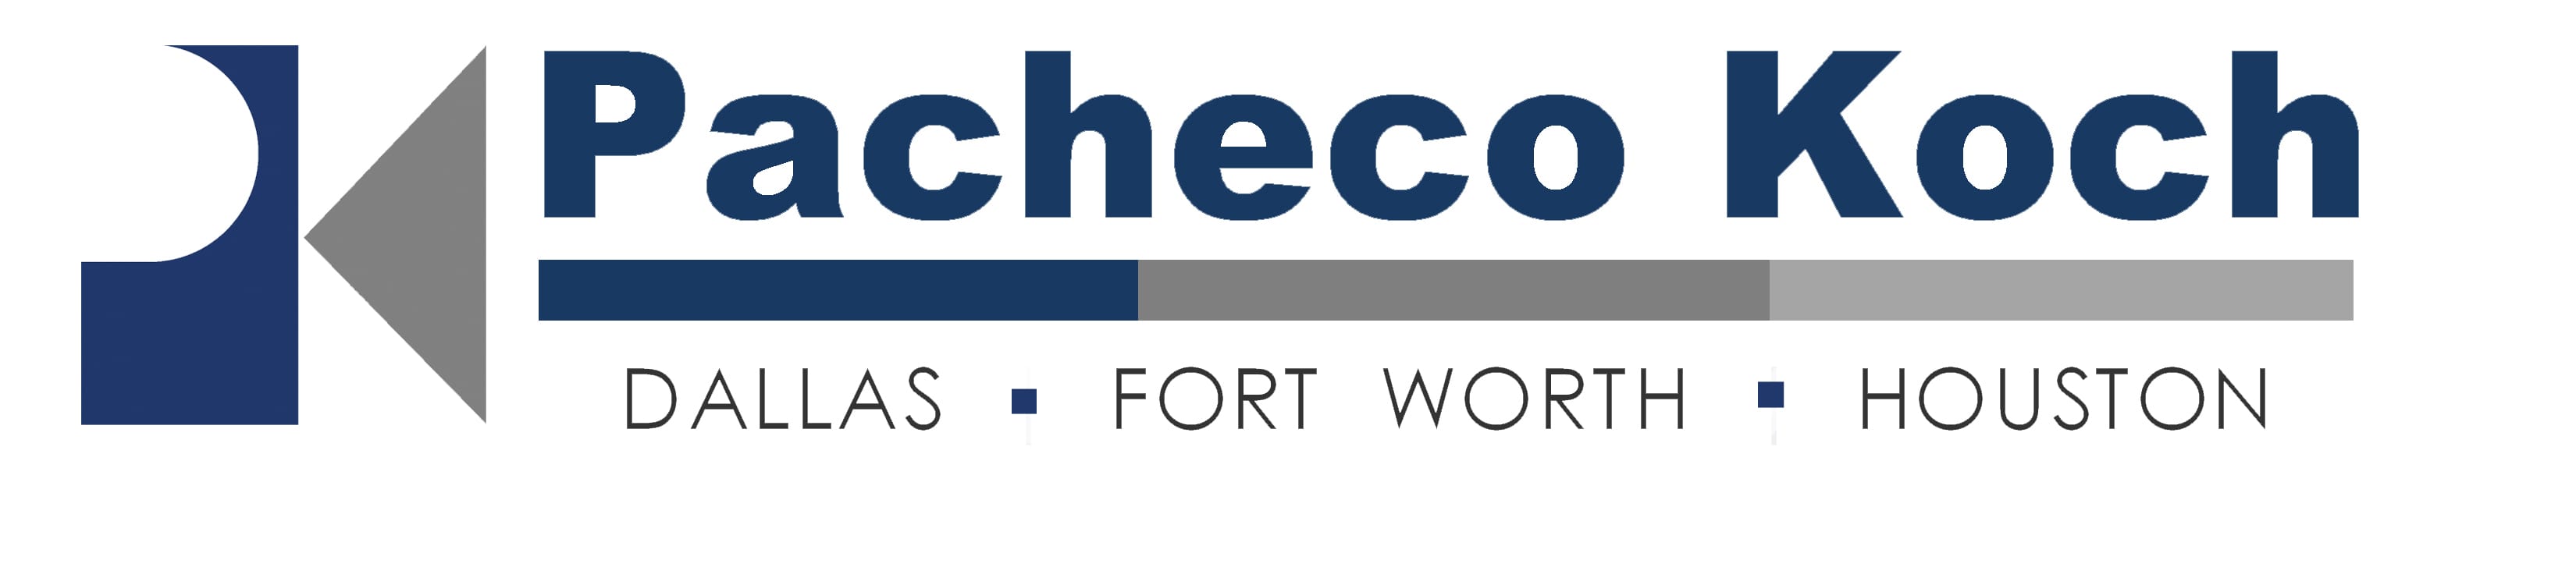 Koch Logo - Pacheco Koch Logo - Young Leader Annual Sponsor - ULI North Texas